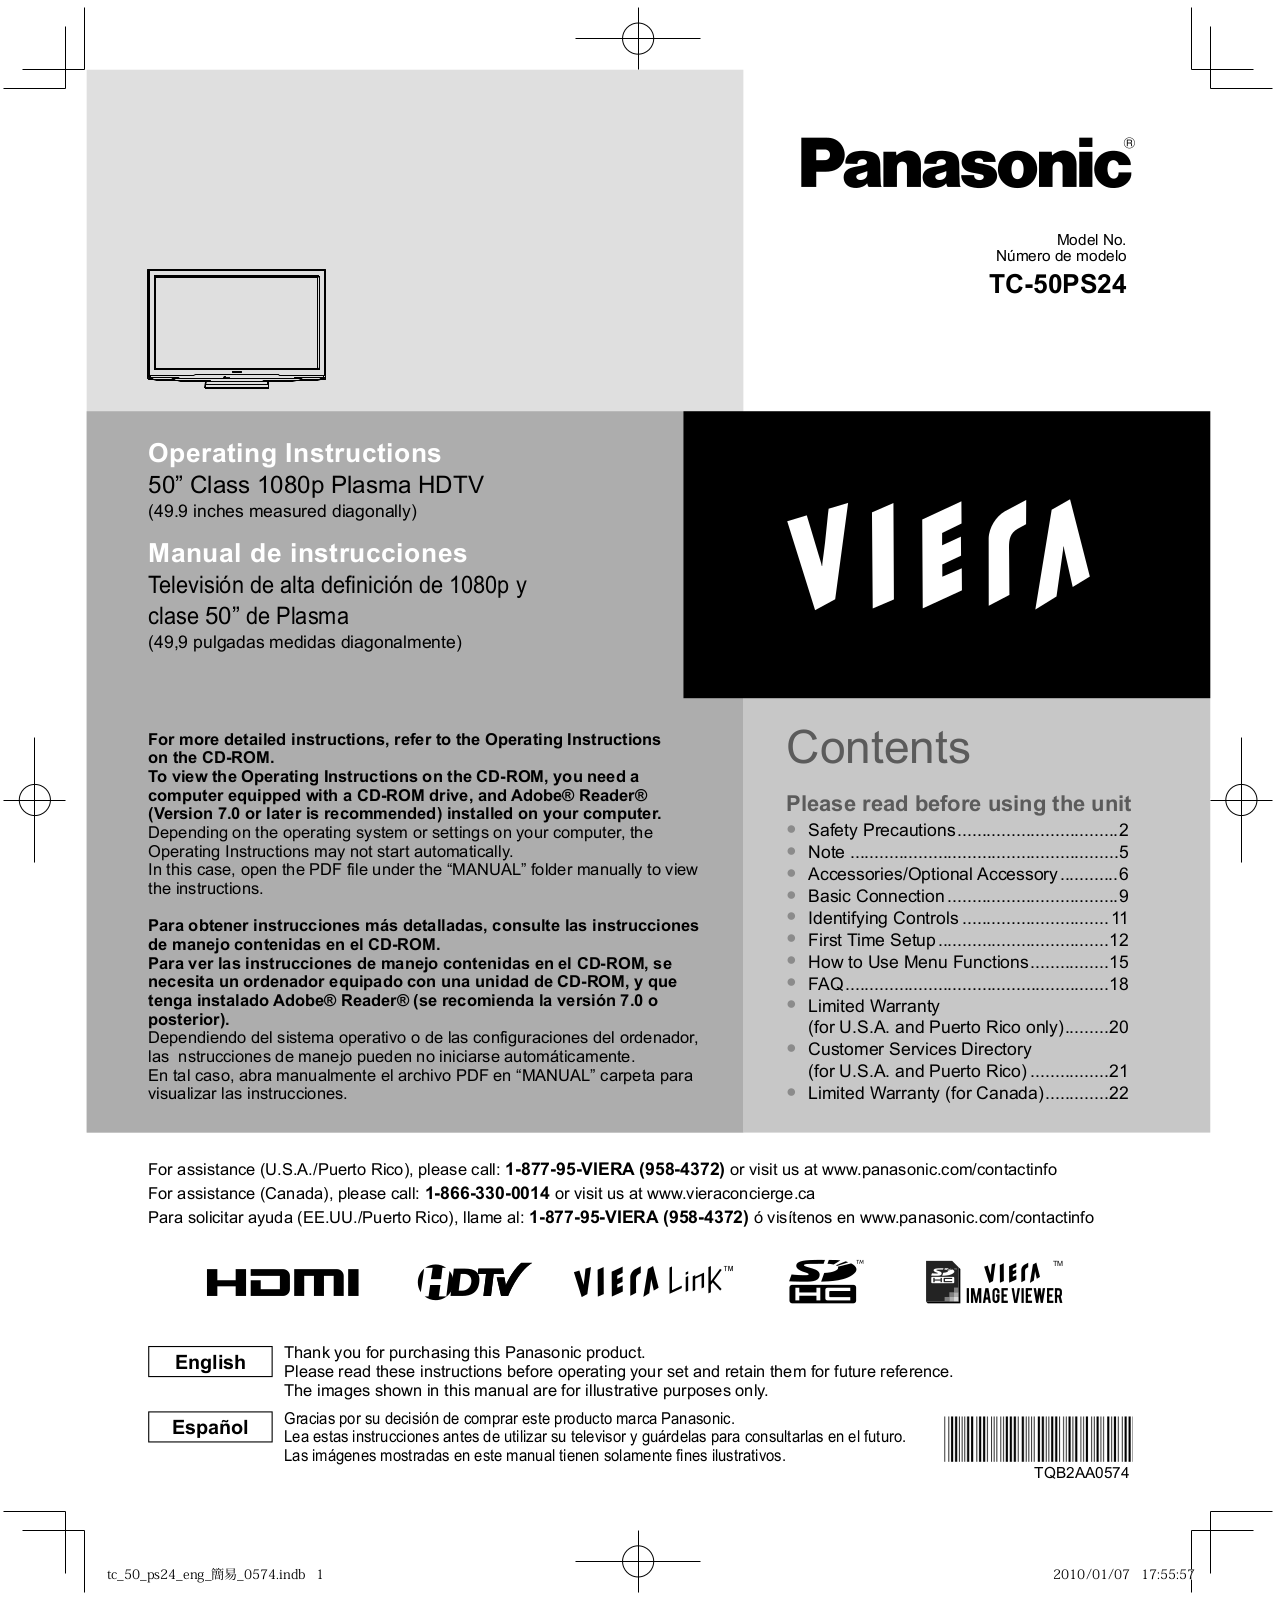 Panasonic TC-50PS24 User Manual